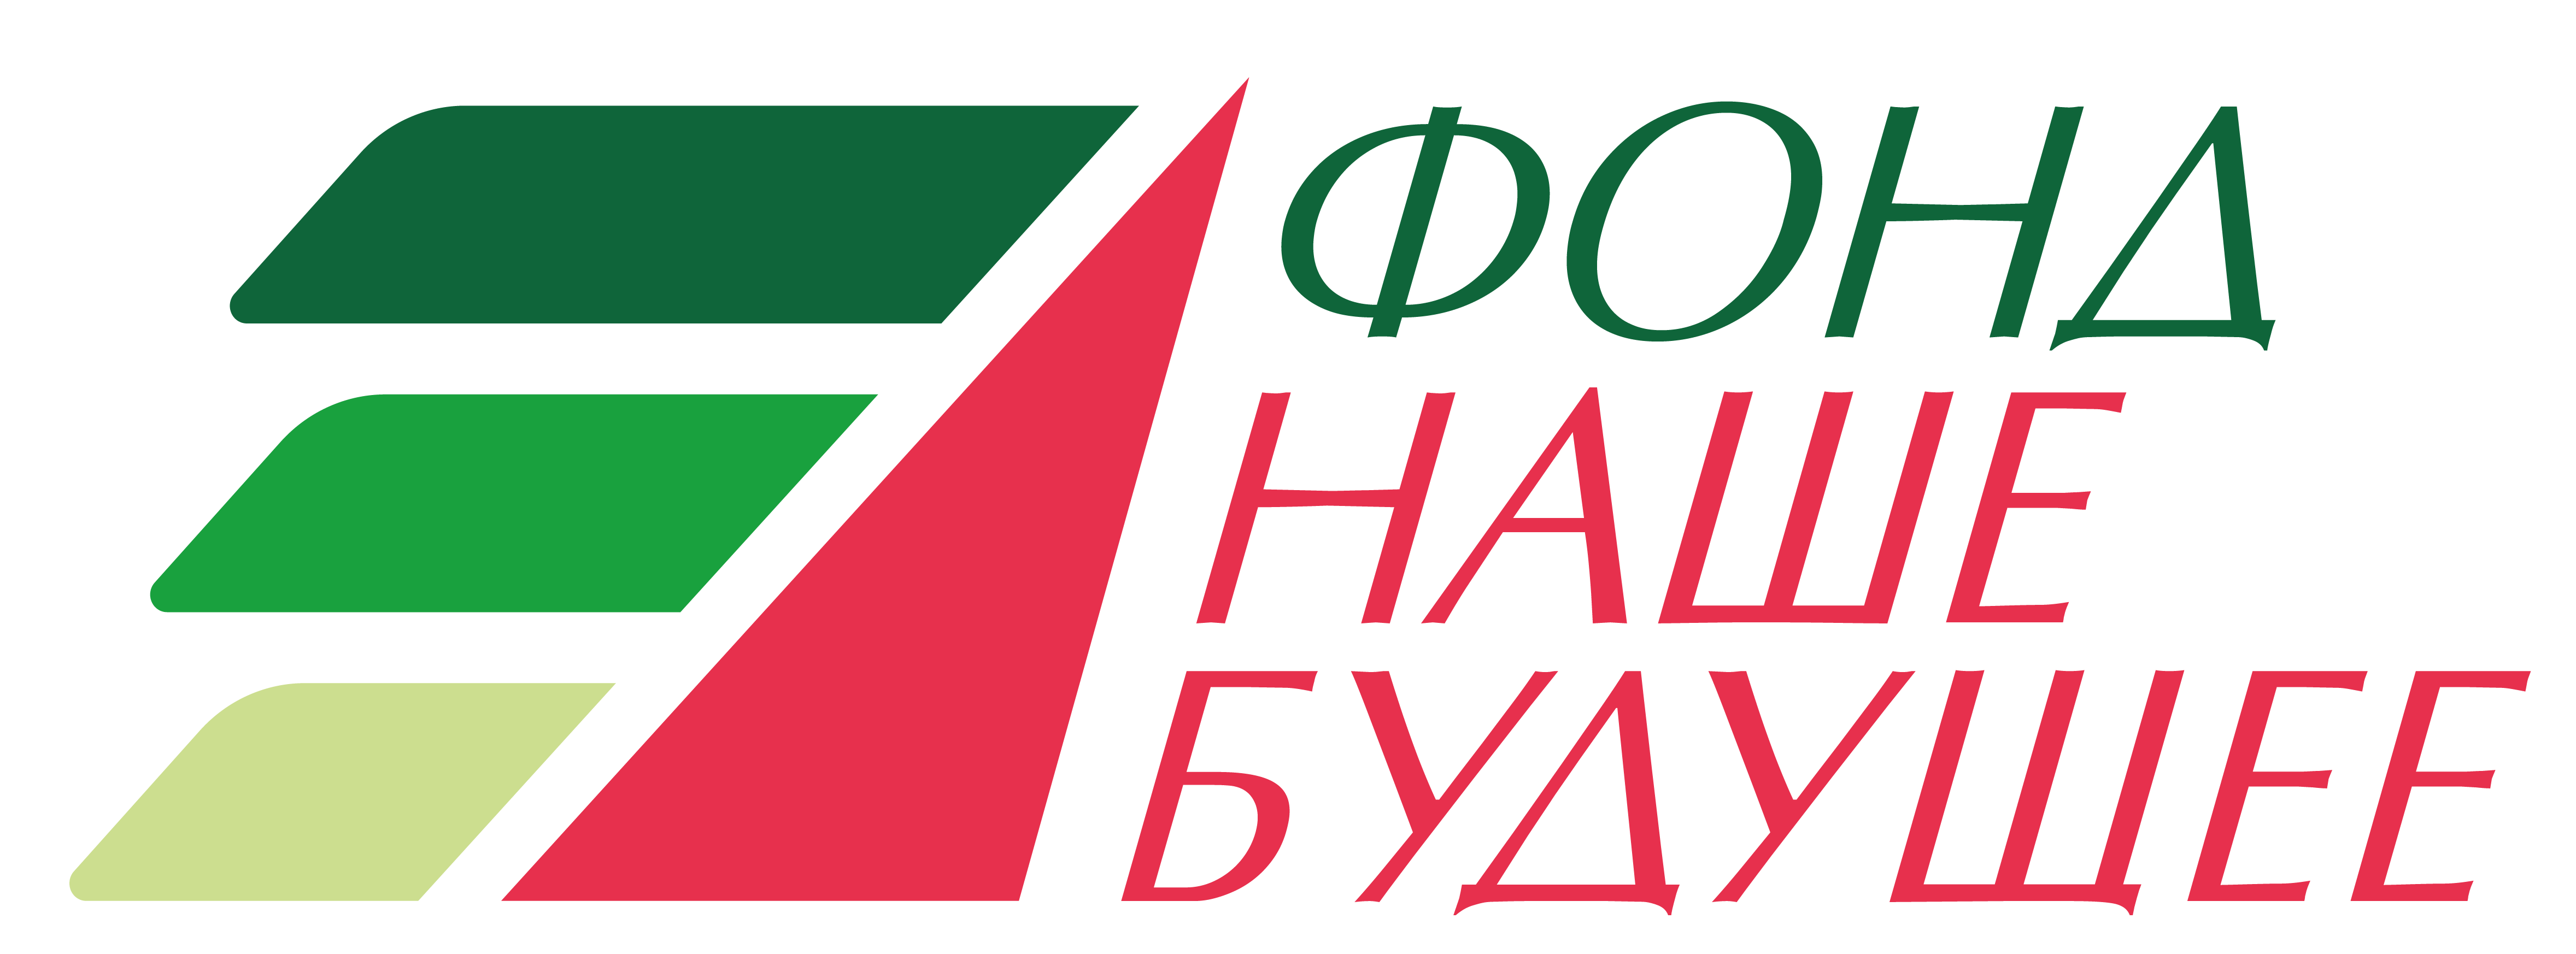 Логотип участника